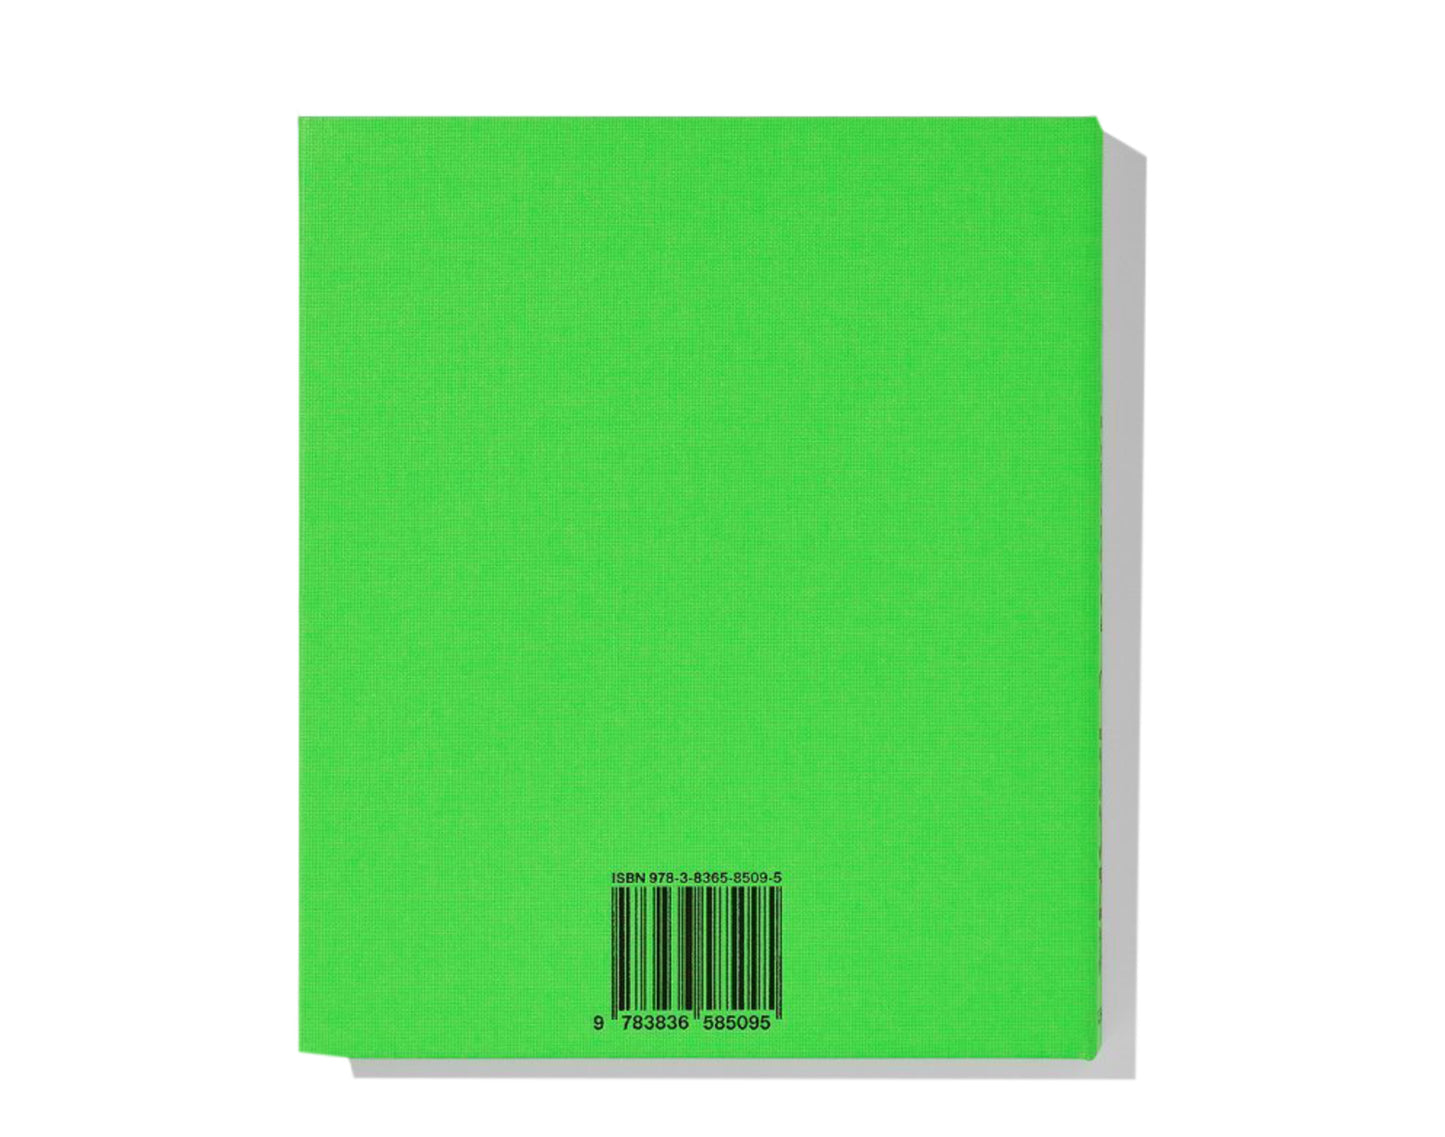 Taschen Books - Virgil Abloh - Nike - ICONS Hardcover Book